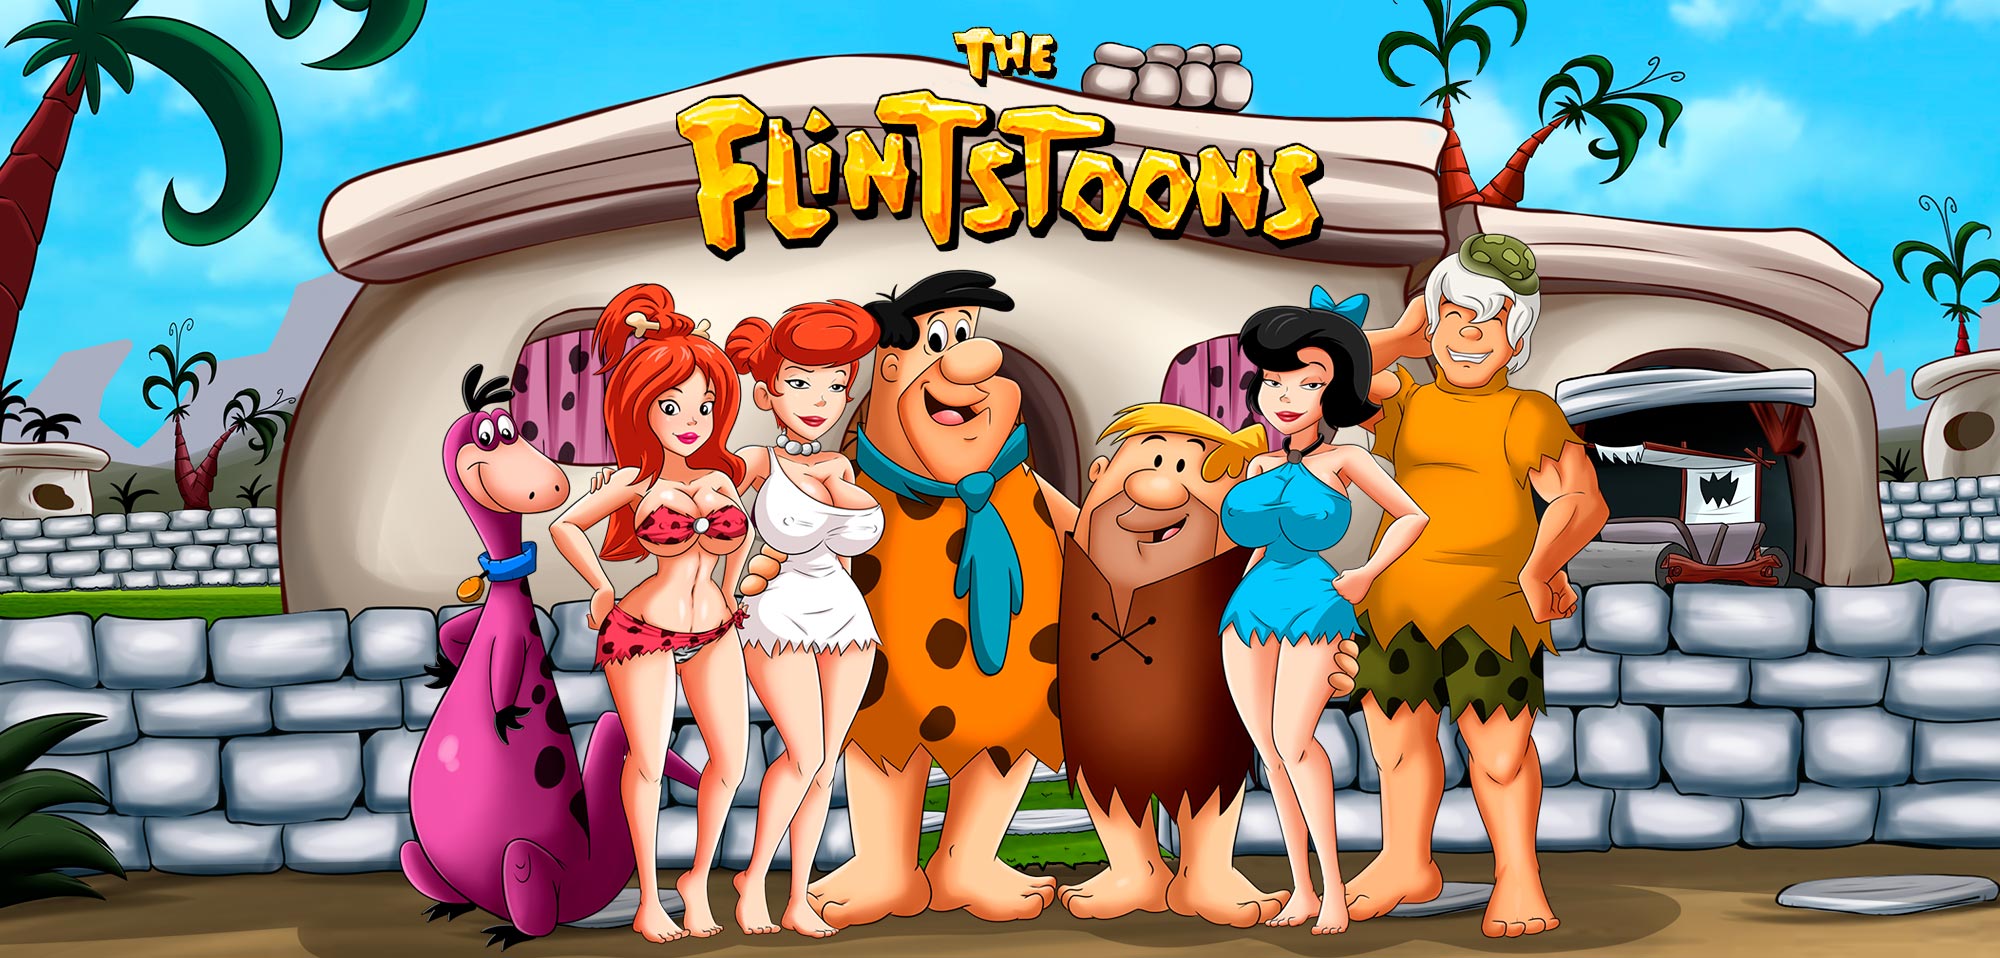 The Flintstoons - header